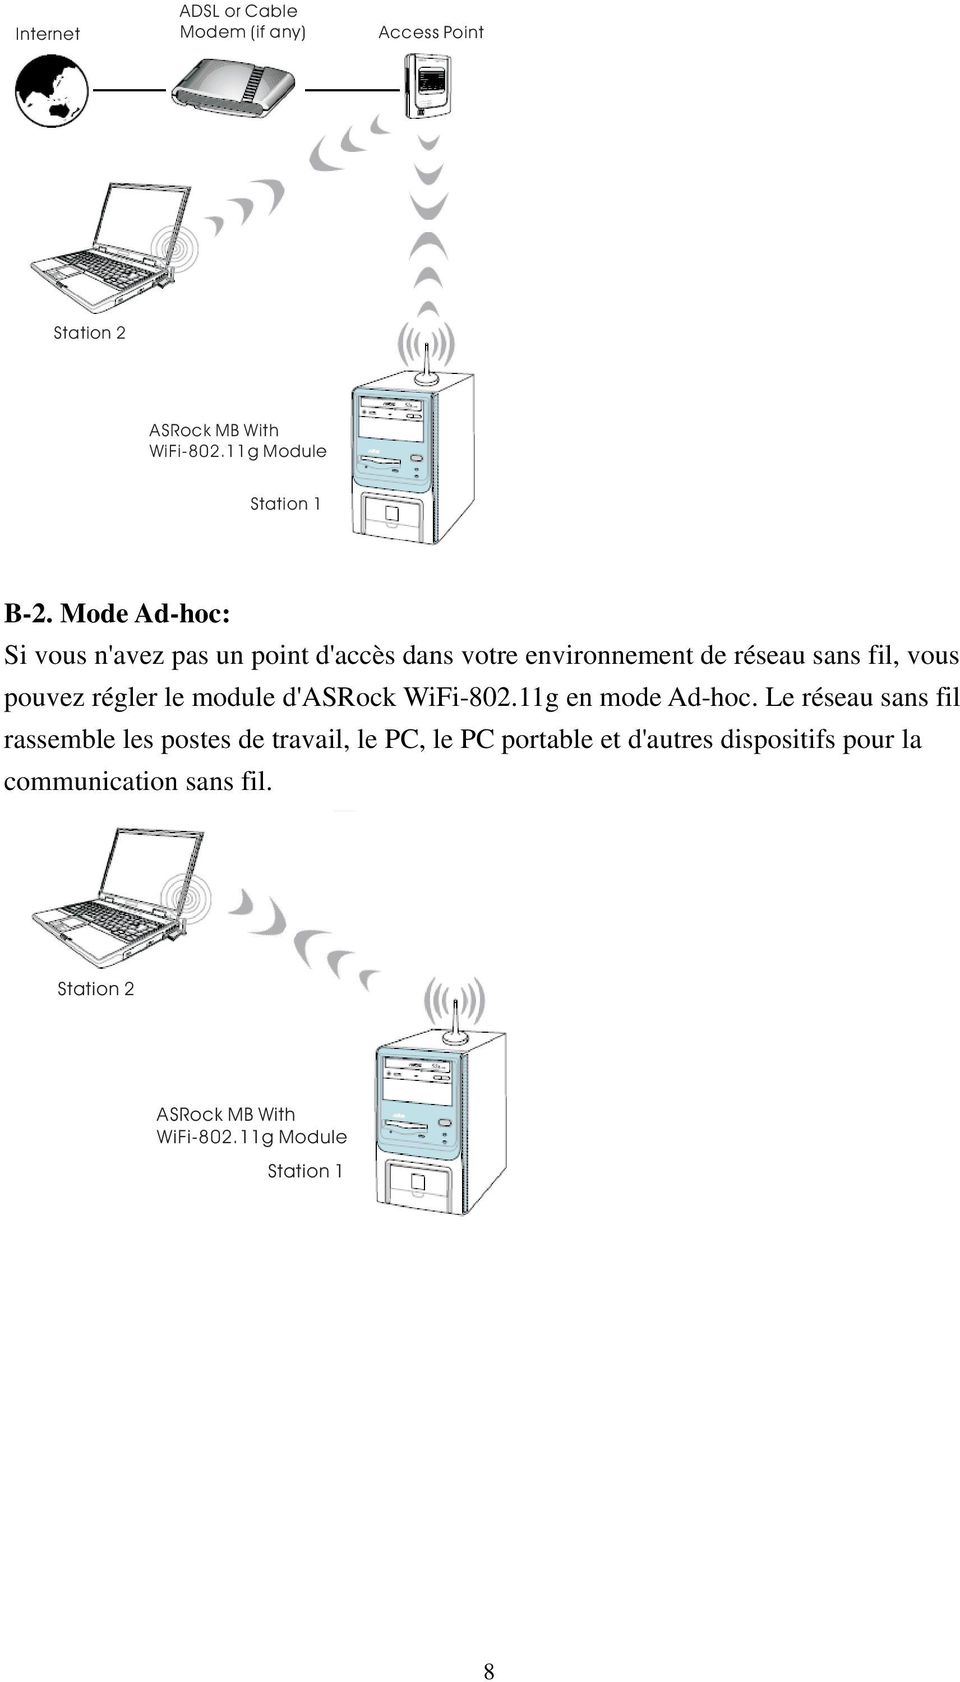 le module d'asrock WiFi-802.11g en mode Ad-hoc.